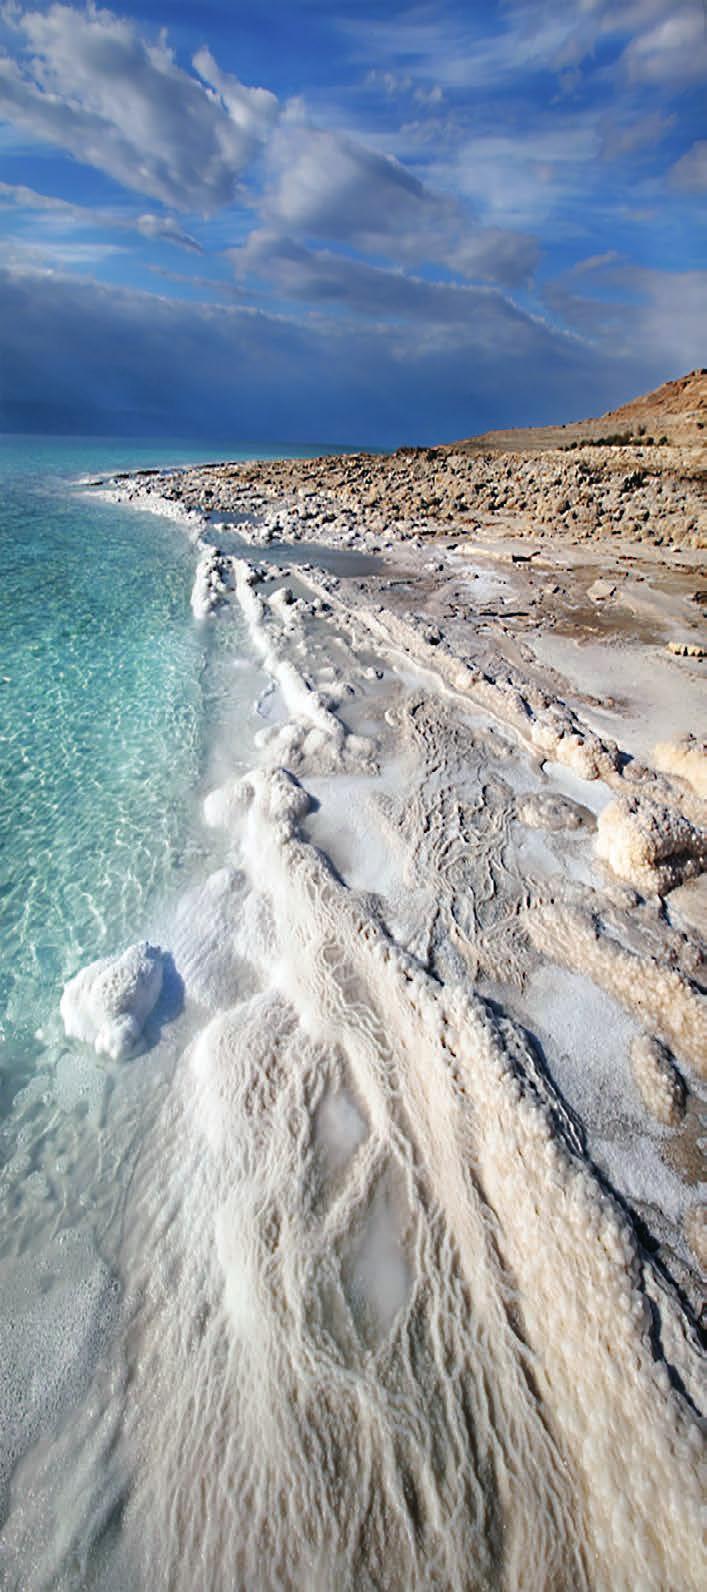 Dead Sea/Masada Rift Valley Dead Sea/Masada Day 4/ Thursday 11th Oct.